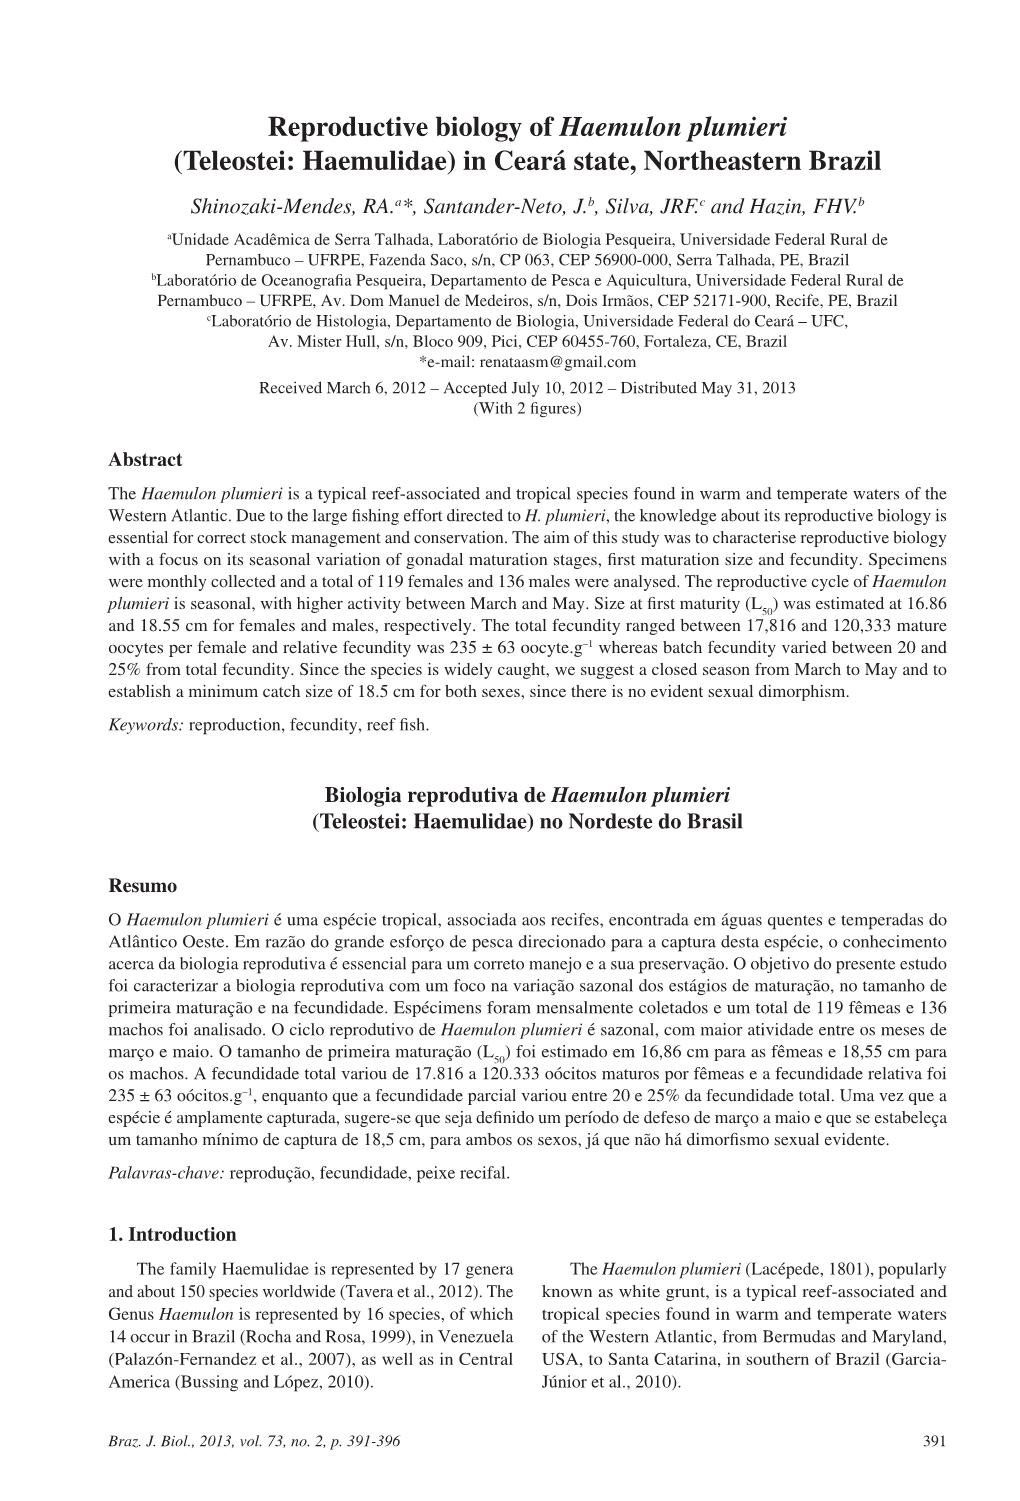 Reproductive Biology of Haemulon Plumieri (Teleostei: Haemulidae)